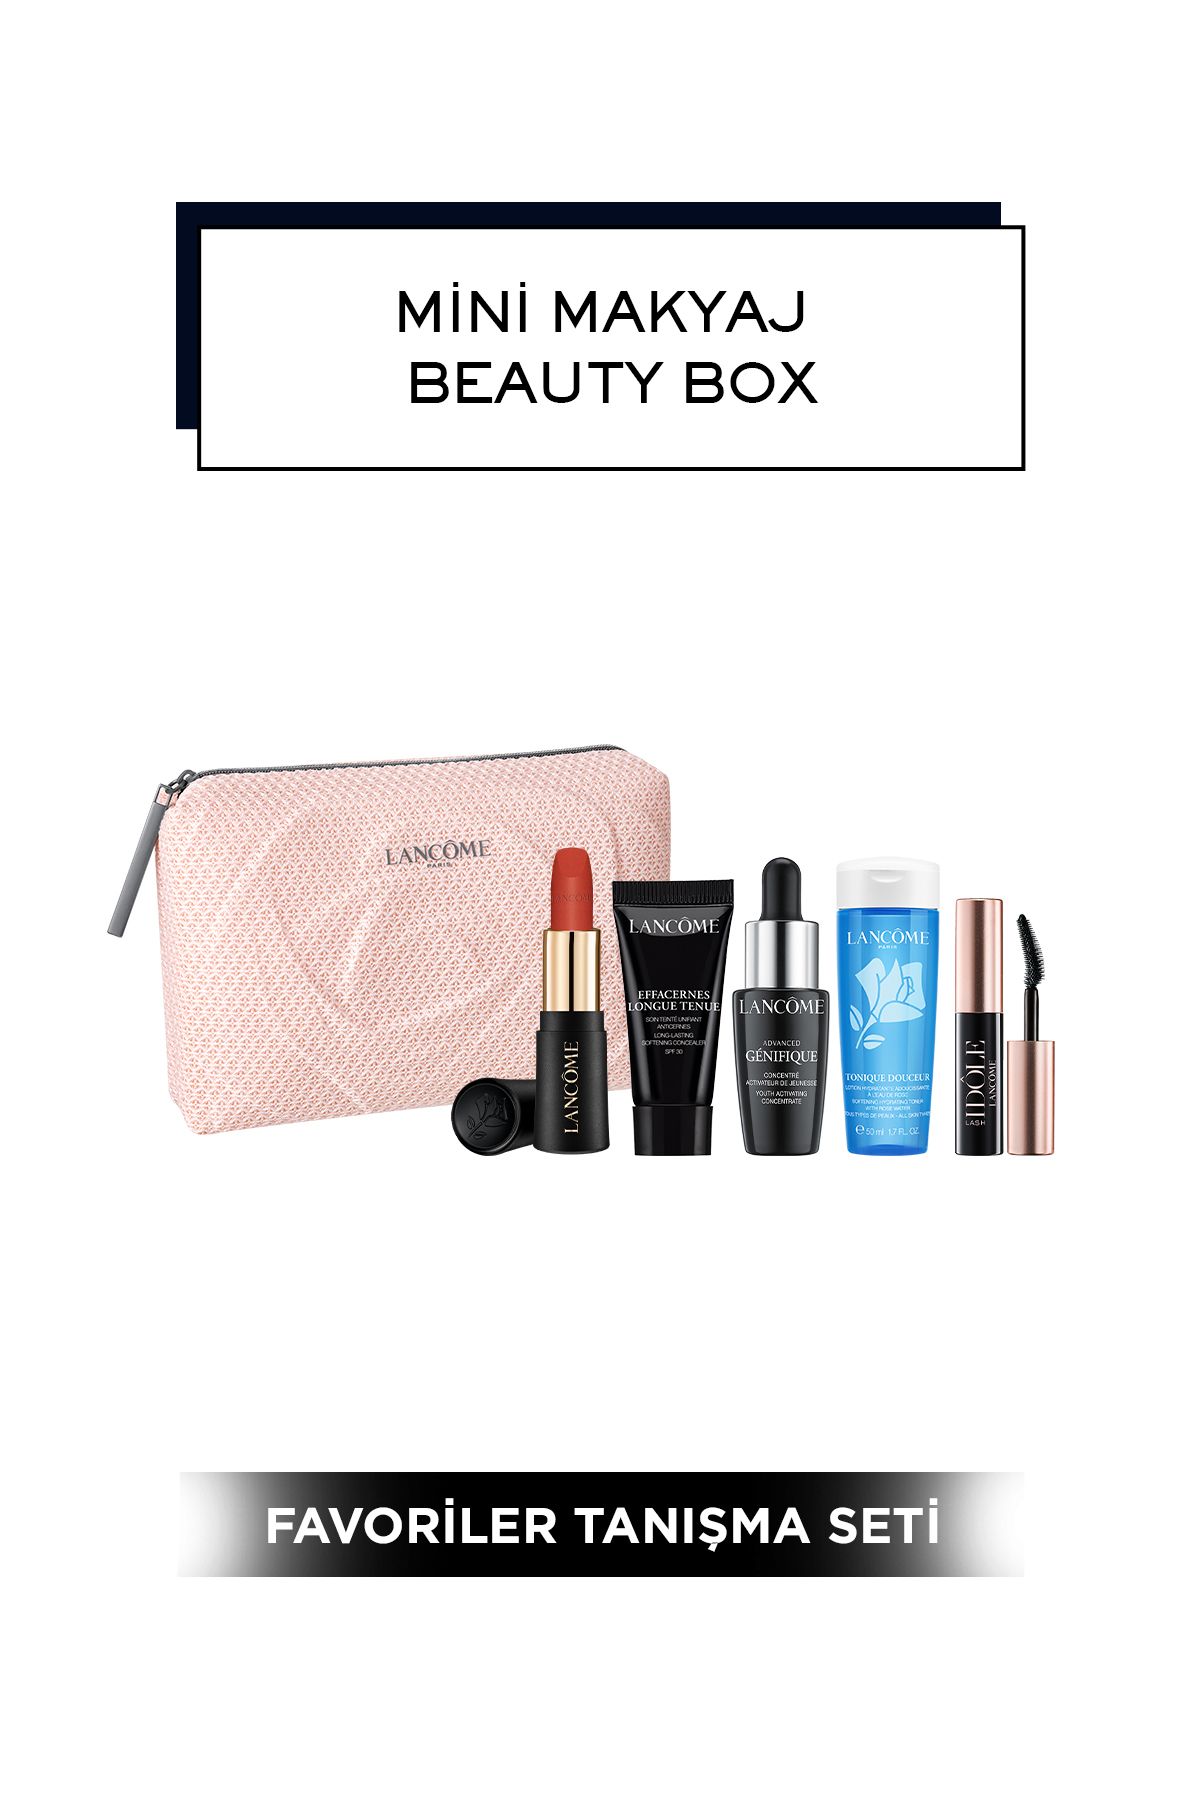 Lancome Mini Makyaj Beauty Box Tanışma Seti 8690595202952